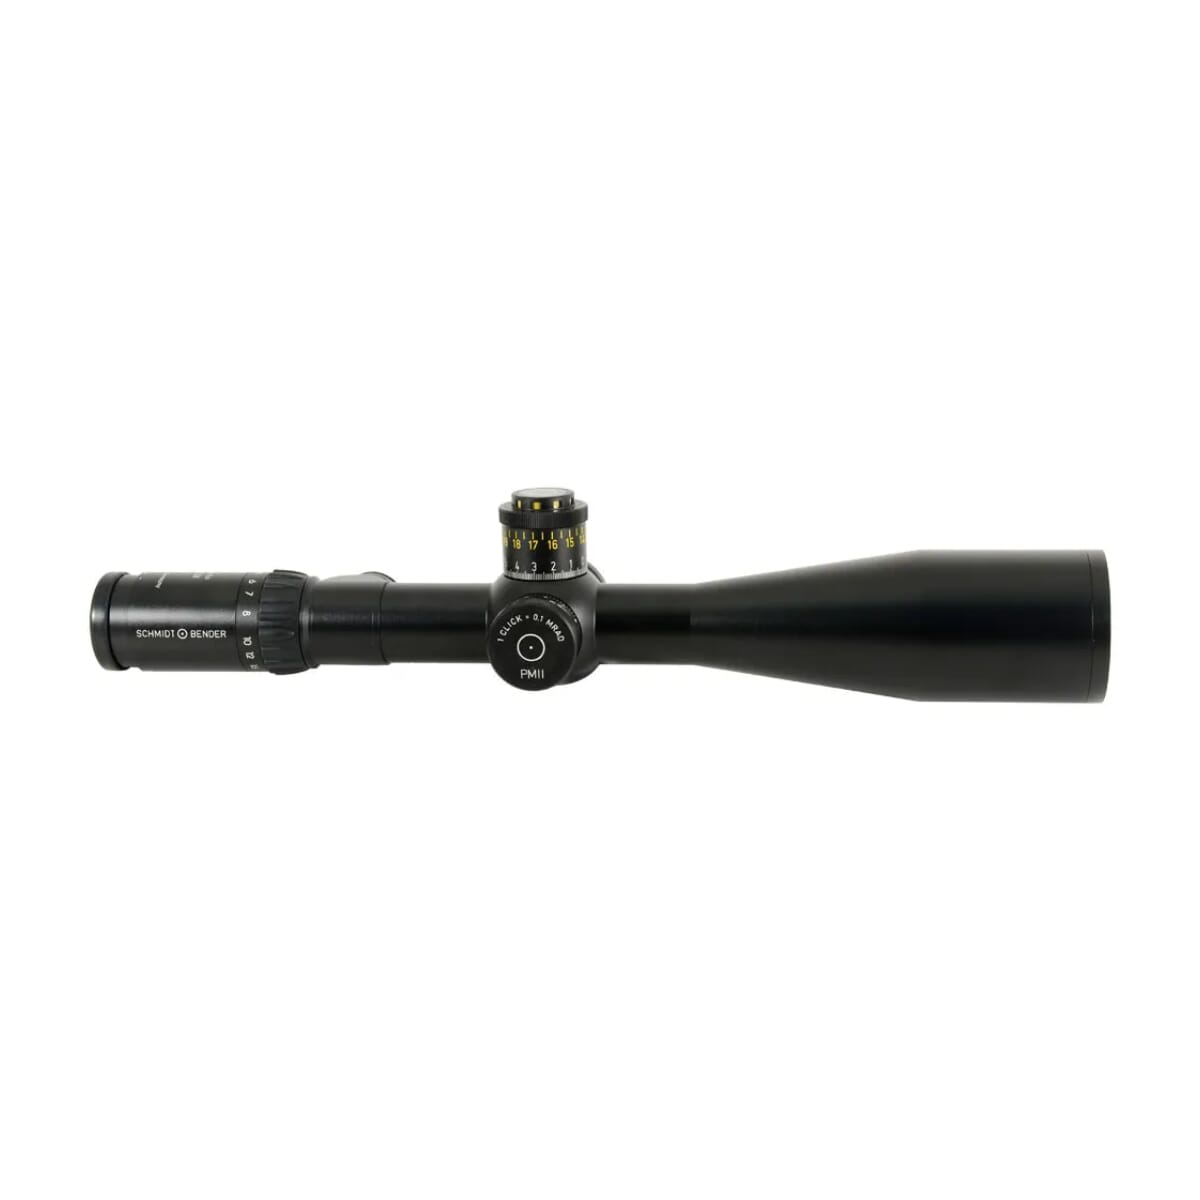 Schmidt Bender 5-25x56mm PM II LP LRR-MIL 1cm ccw DT / ST Riflescope 689-911-41C-90-68